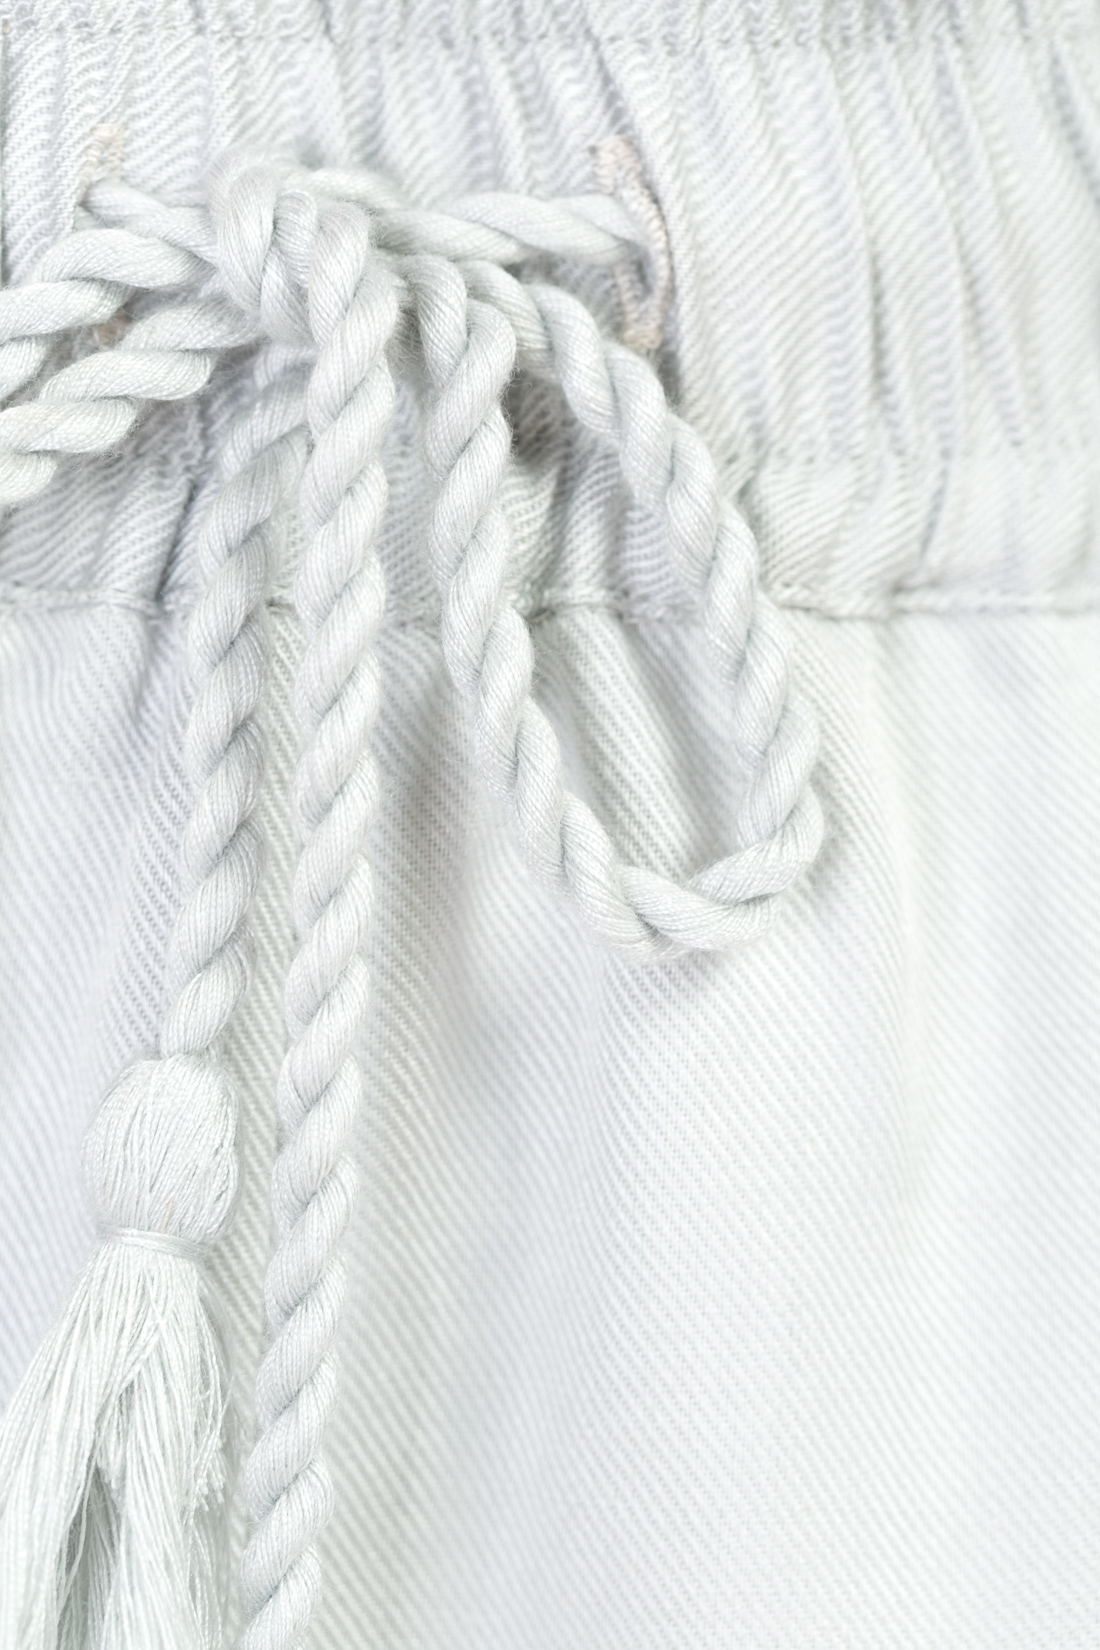 Юбка со шнурками (арт. baon B477036), размер XL, цвет белый Юбка со шнурками (арт. baon B477036) - фото 4